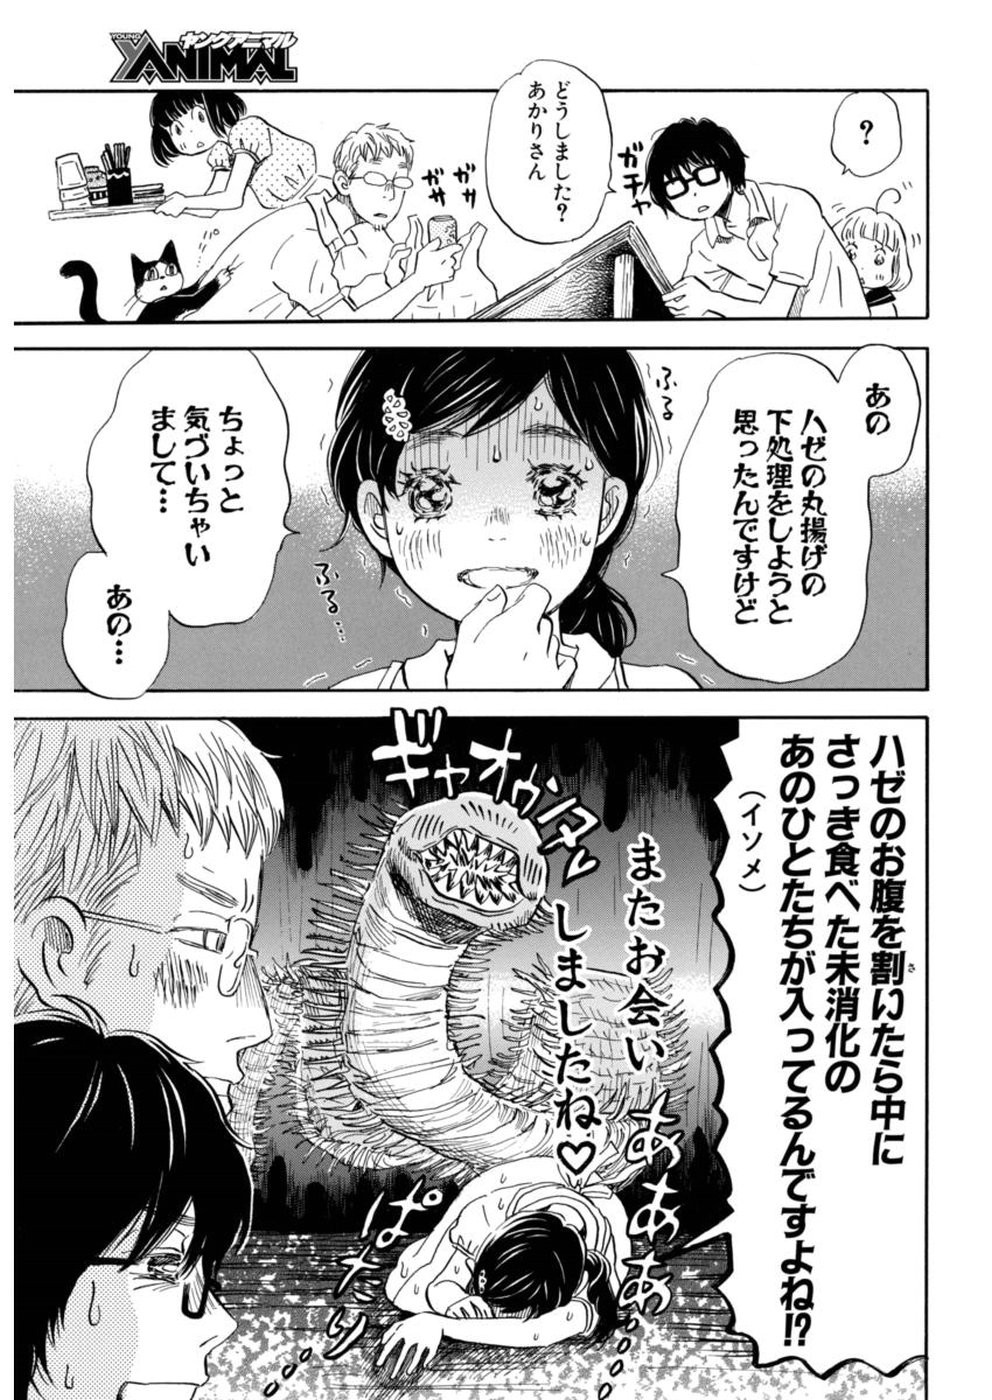 3 Gatsu no Lion - Chapter 146 - Page 3